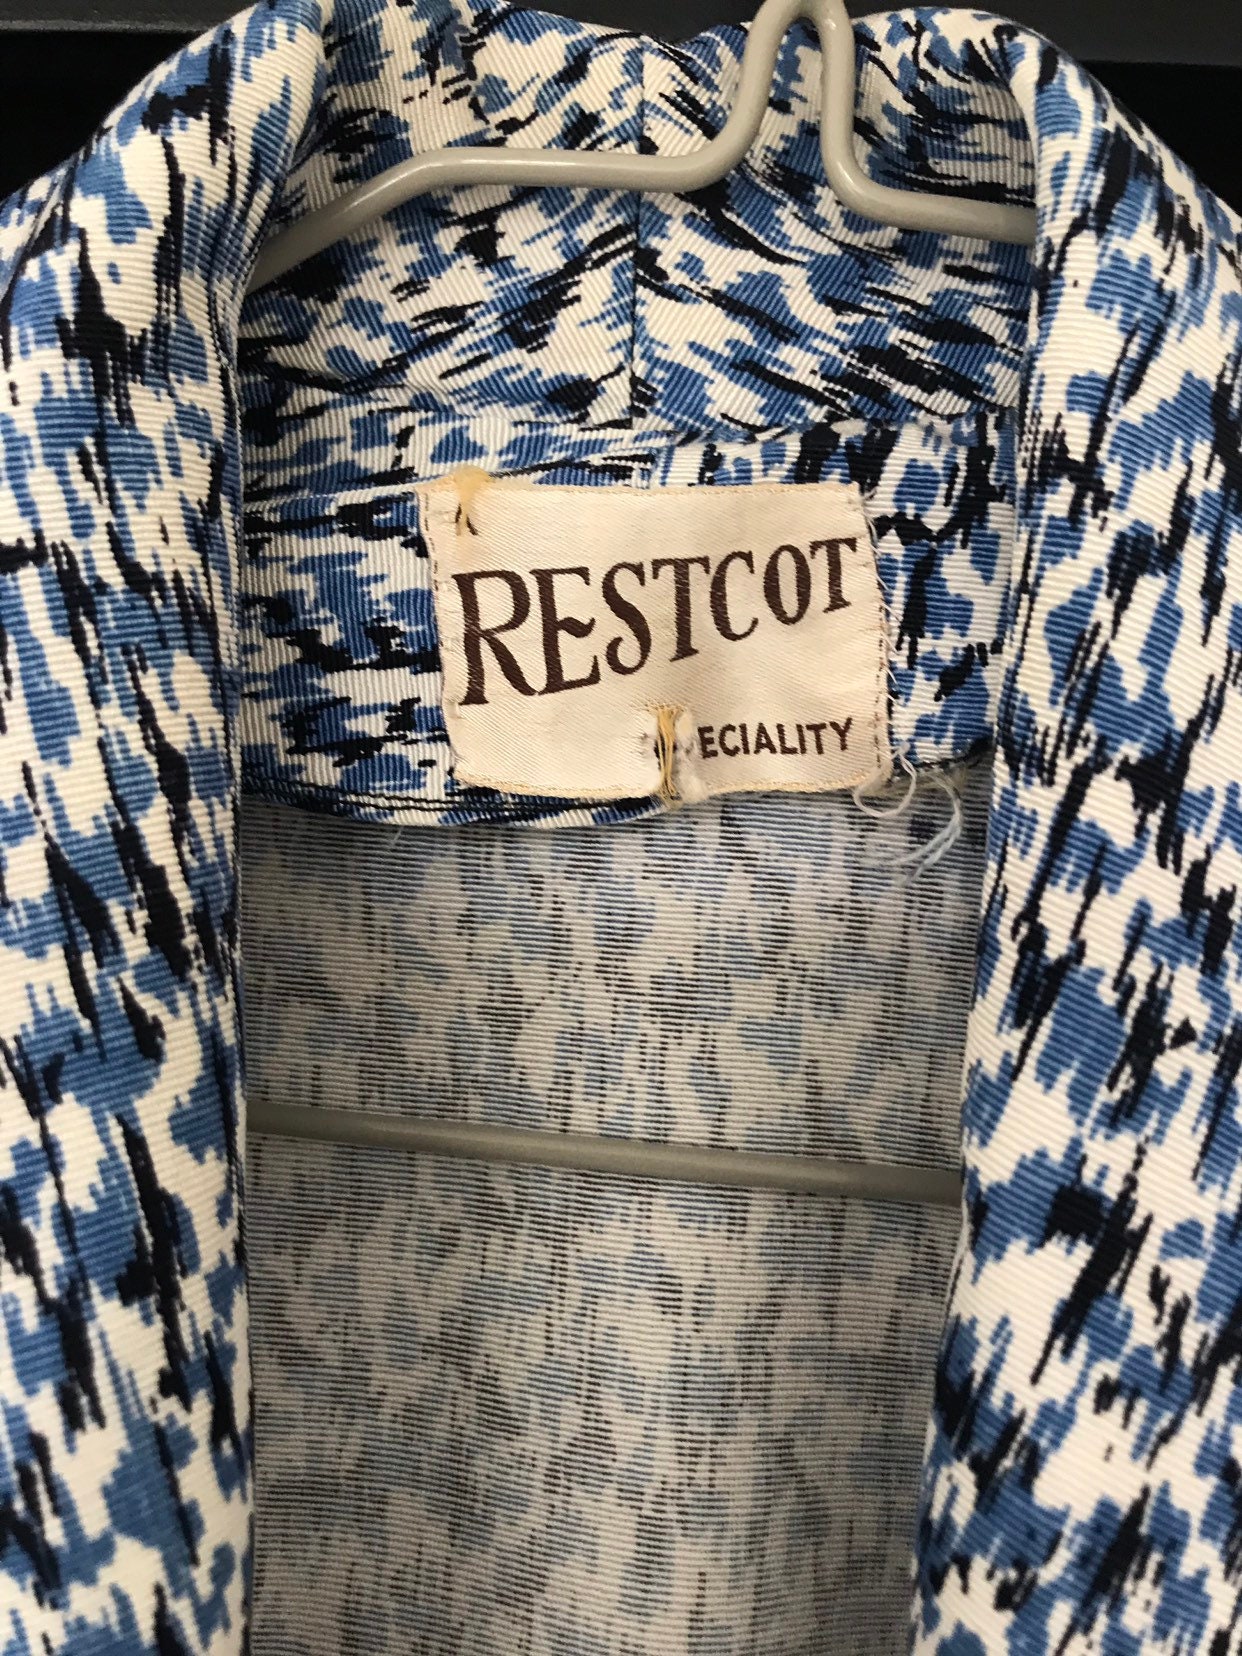 Vintage 1950s blue Jacket Label Restcot | Etsy